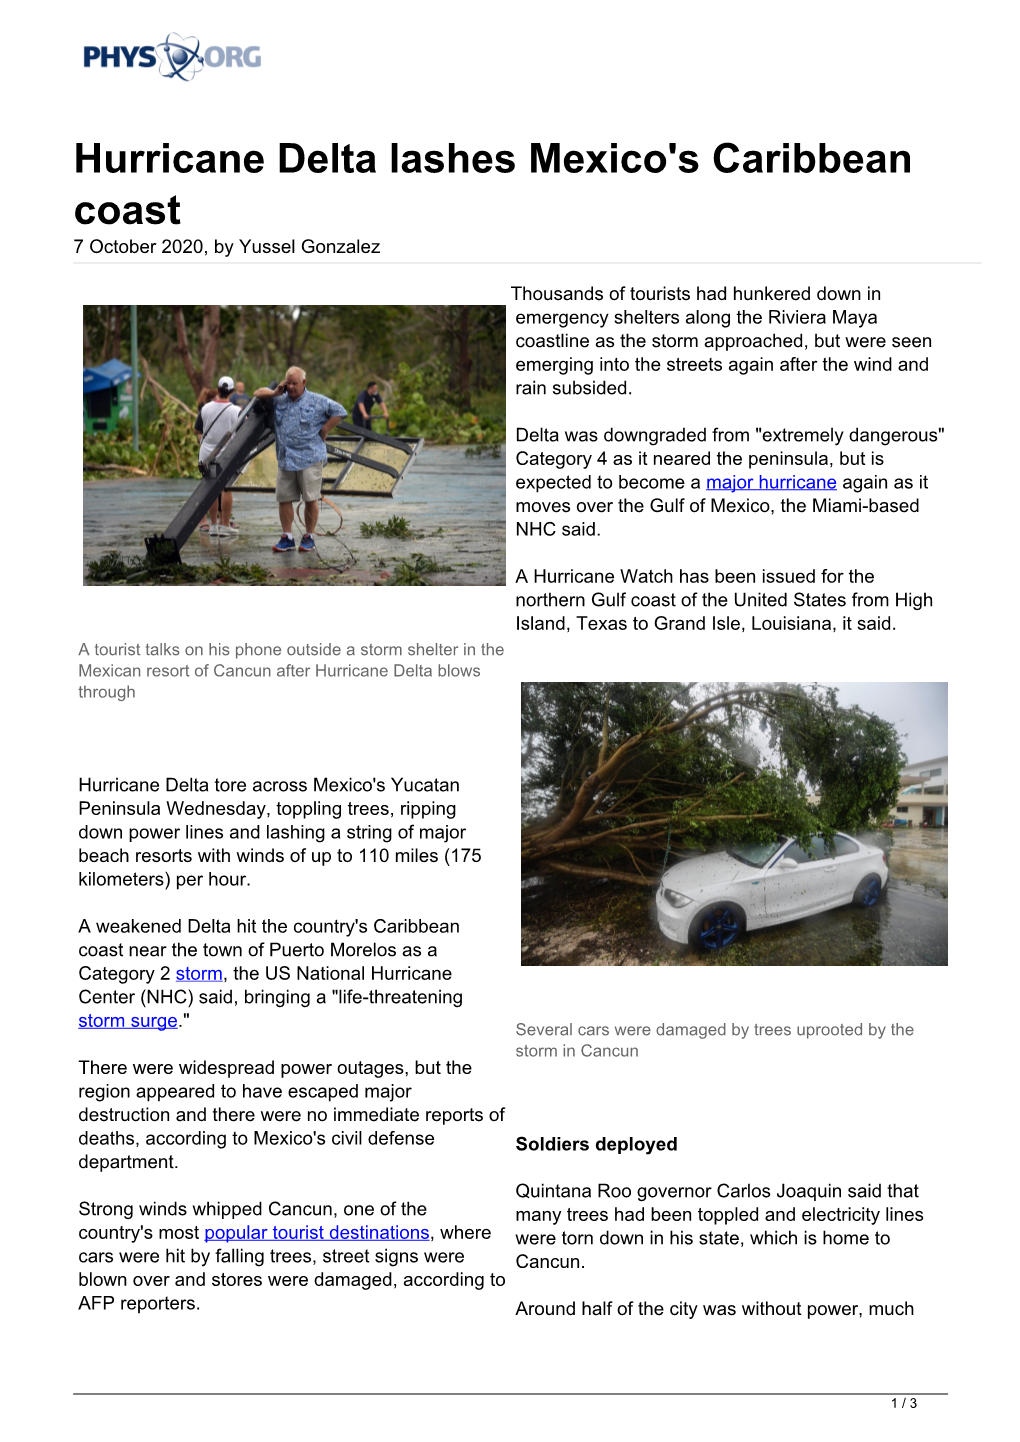 Hurricane Delta Lashes Mexico's Caribbean Coast 7 October 2020, by Yussel Gonzalez